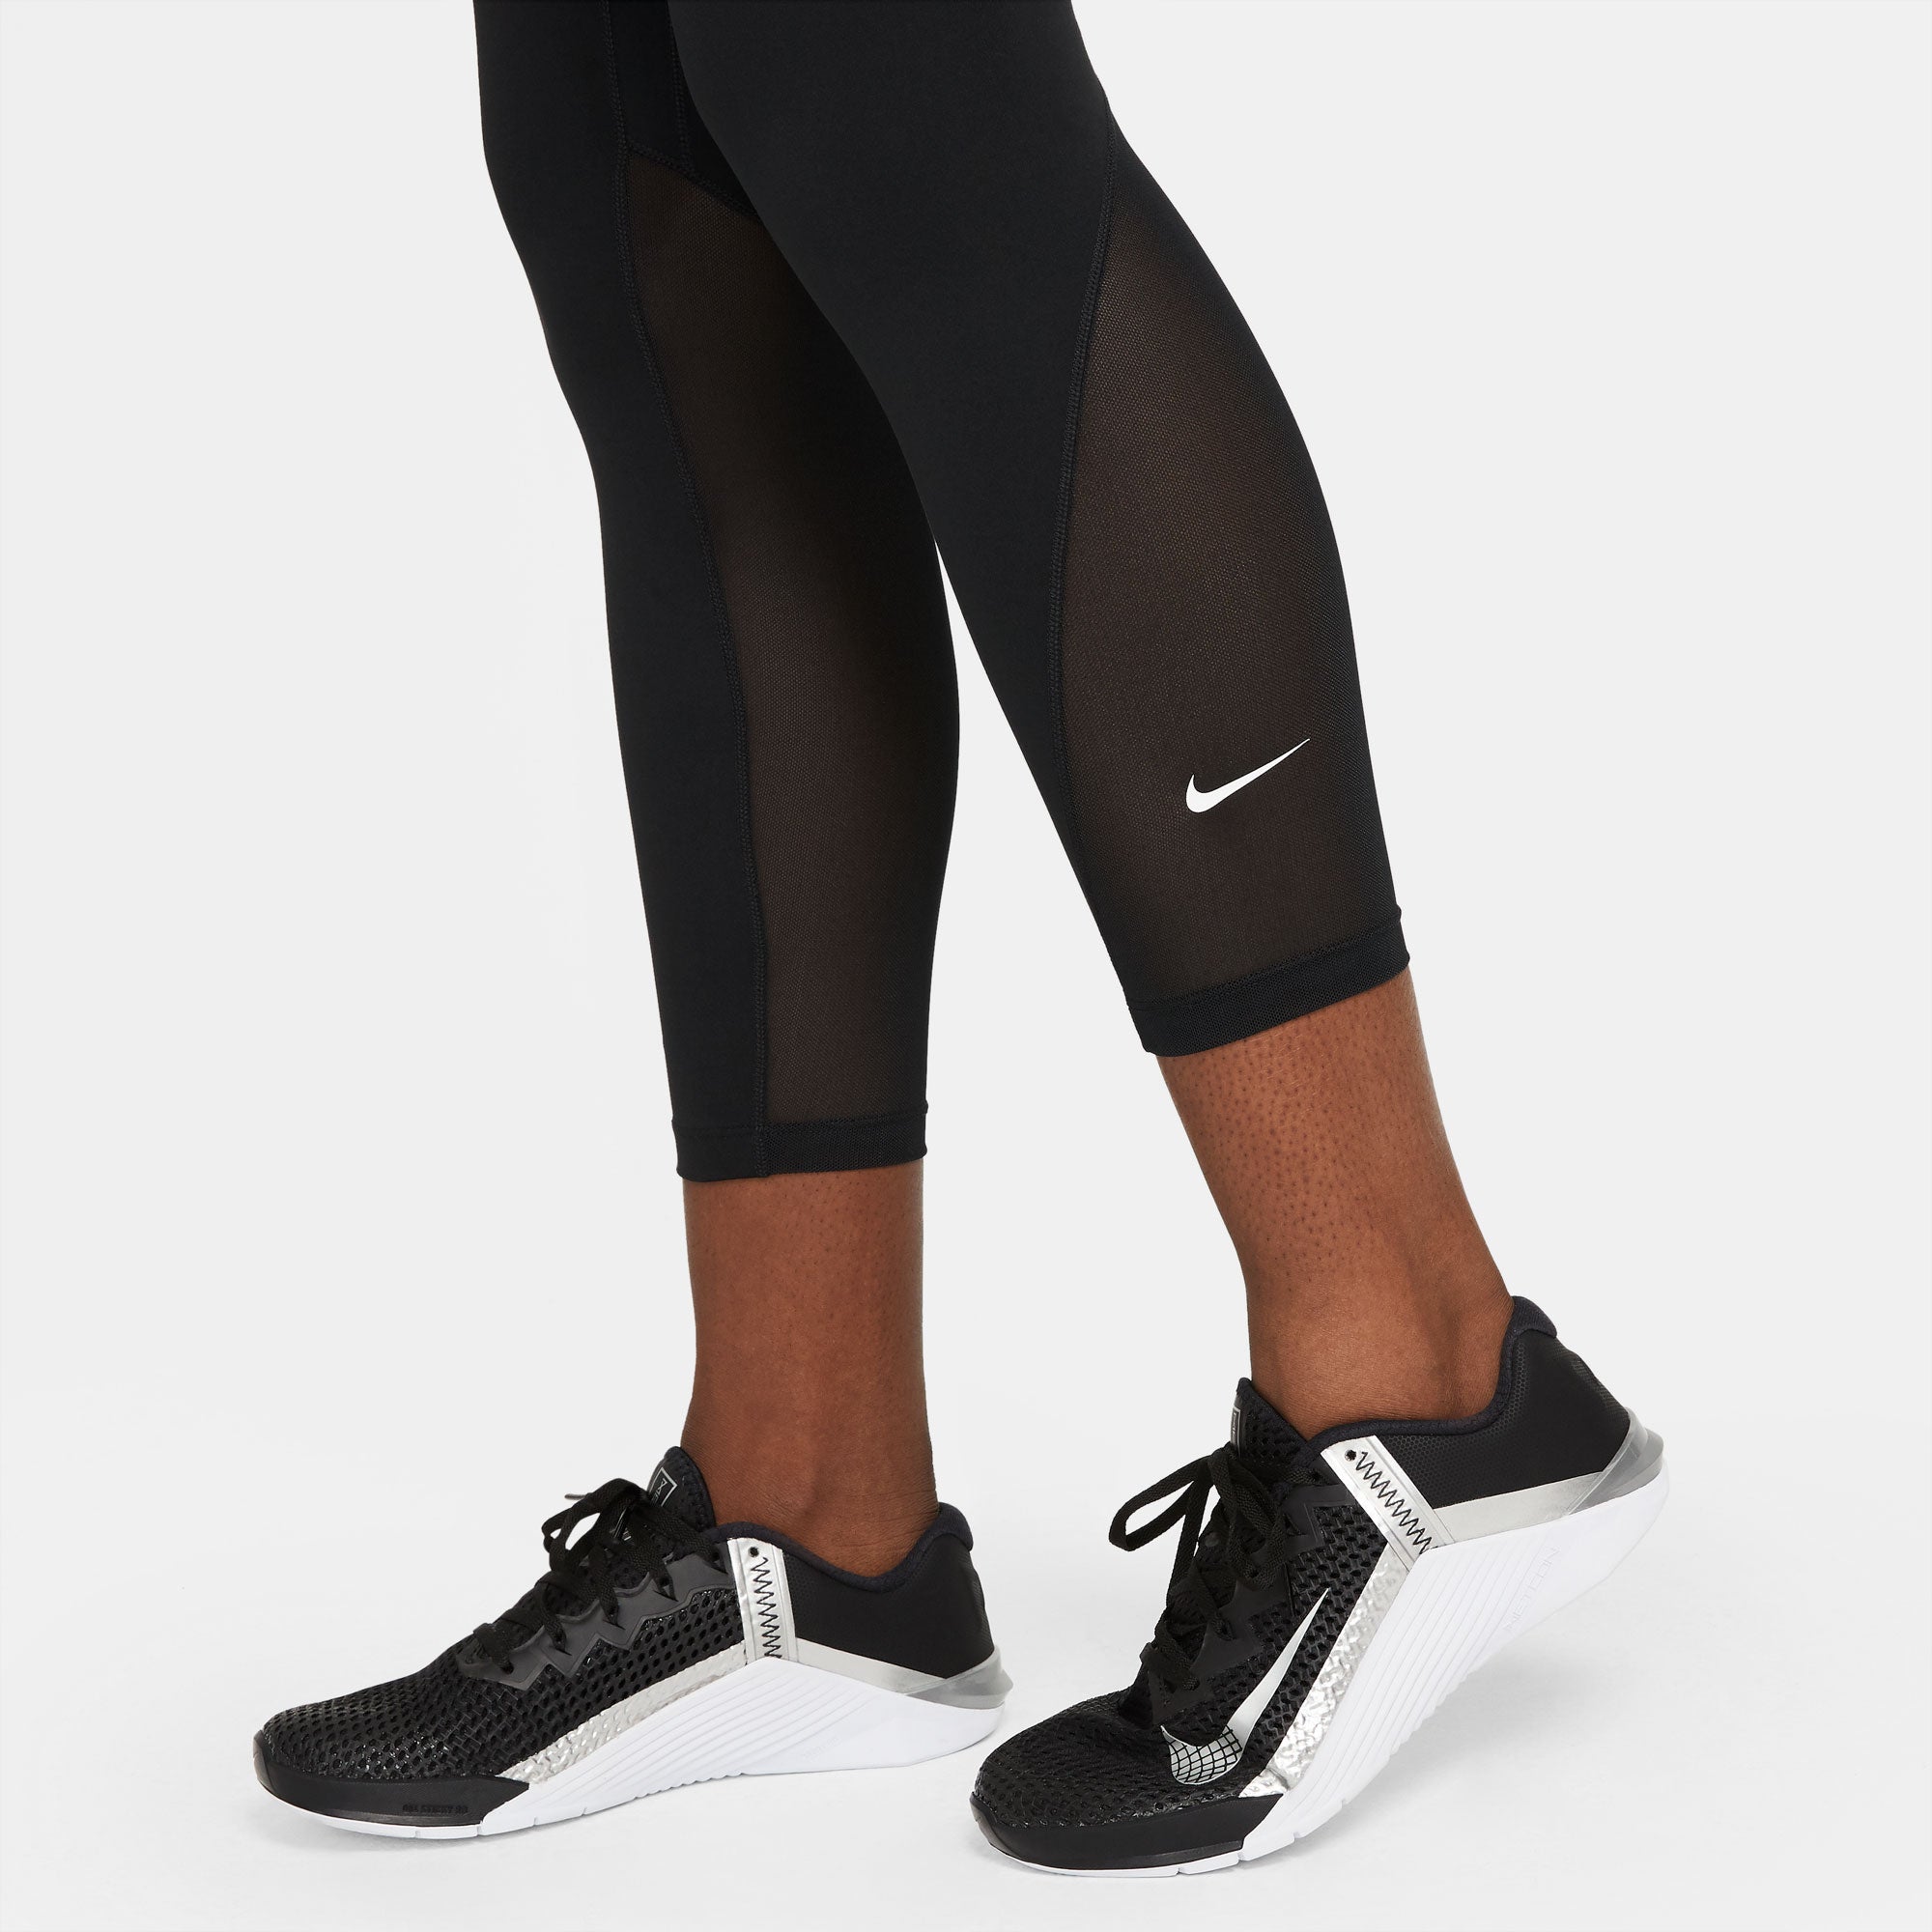 Nike One Training dri fit high rise 7/8 leggings in mica green